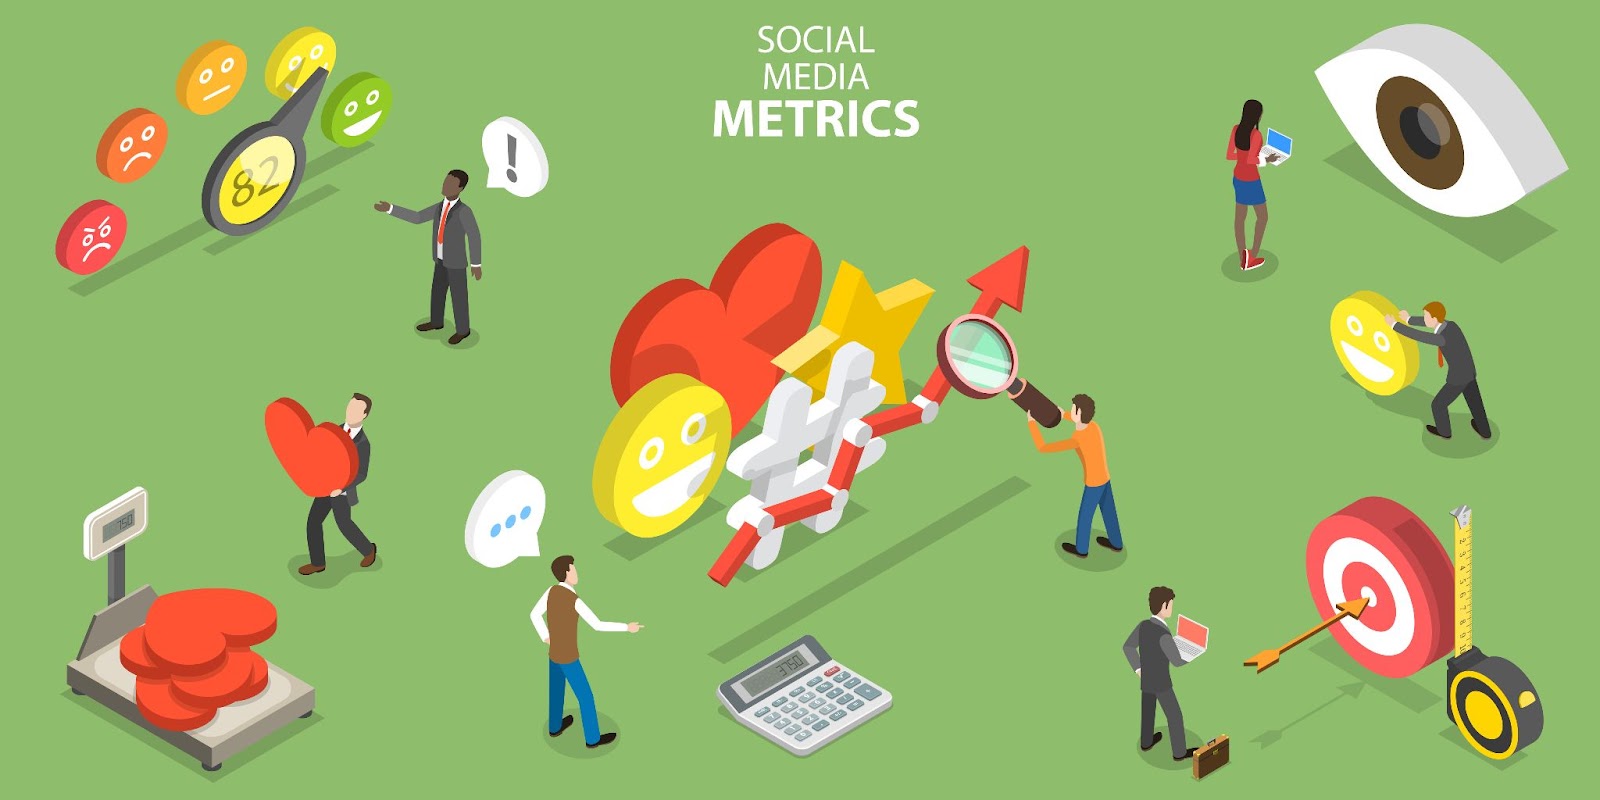 A graphic illustrating various social media metrics.